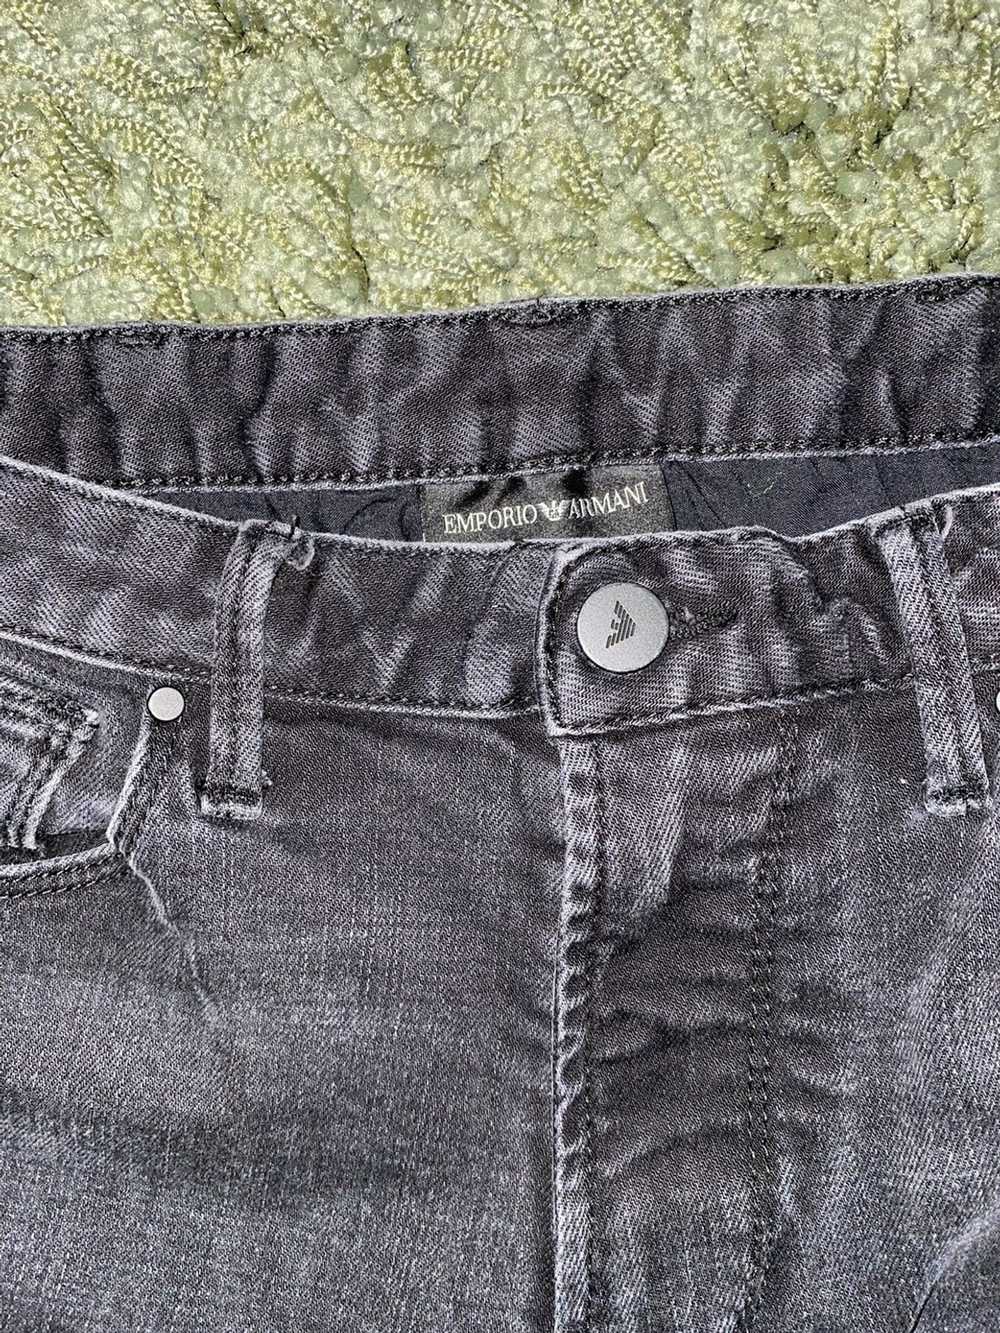 Emporio Armani Emporio Armani Black Jeans - image 2